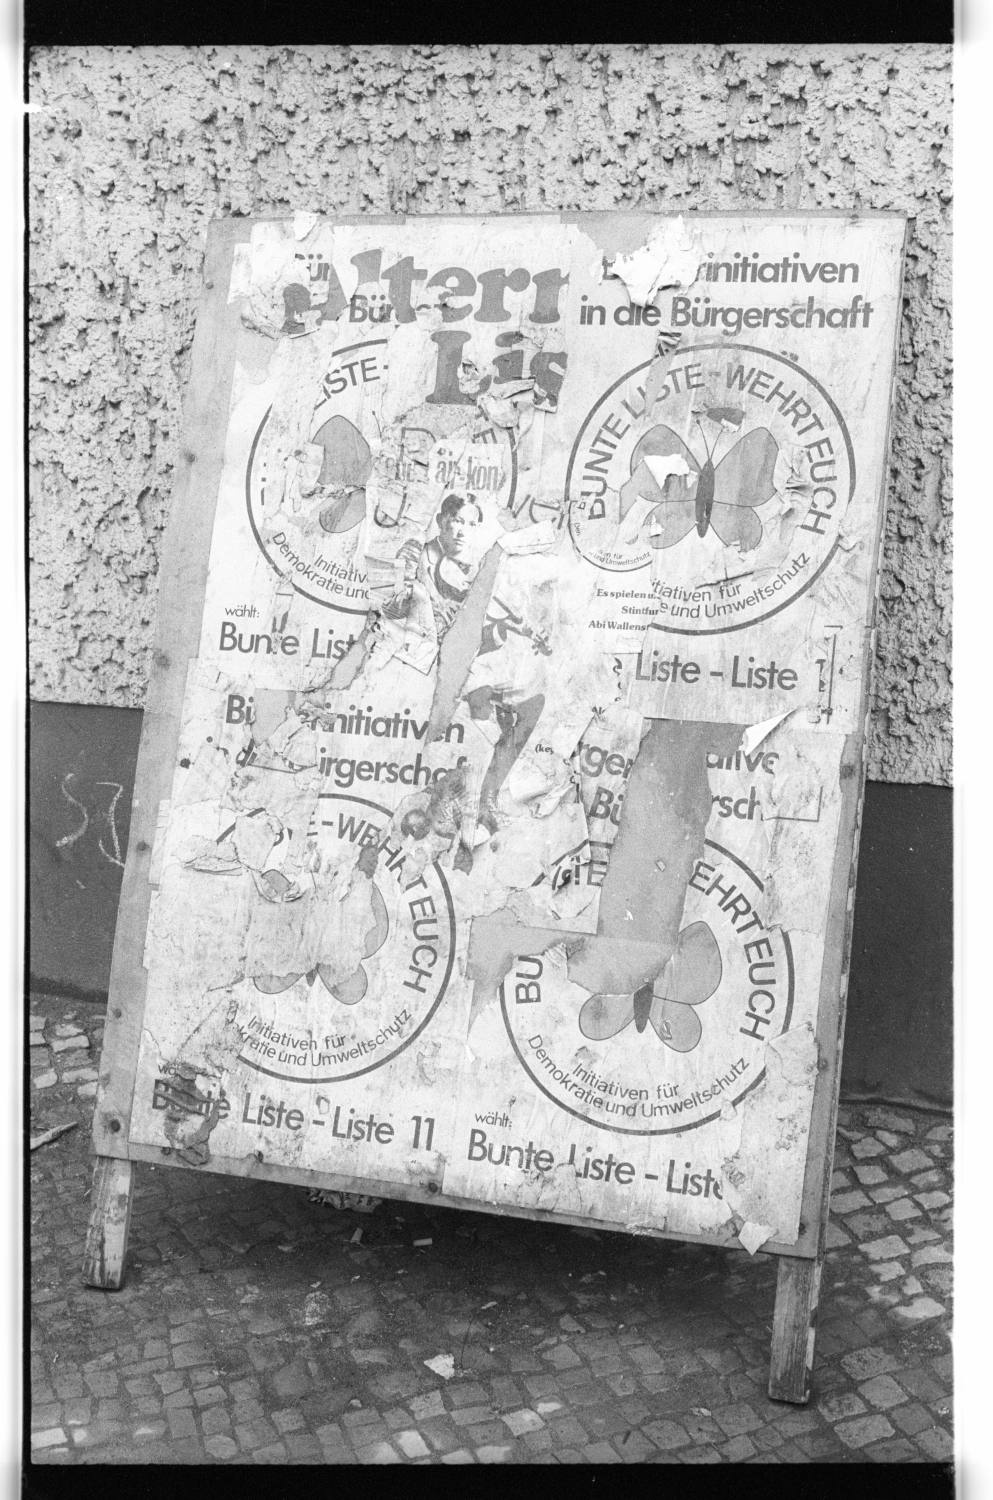 Kleinbildnegative: Wahlplakat der Alternativen Liste, 1979 (Museen Tempelhof-Schöneberg/Jürgen Henschel RR-F)